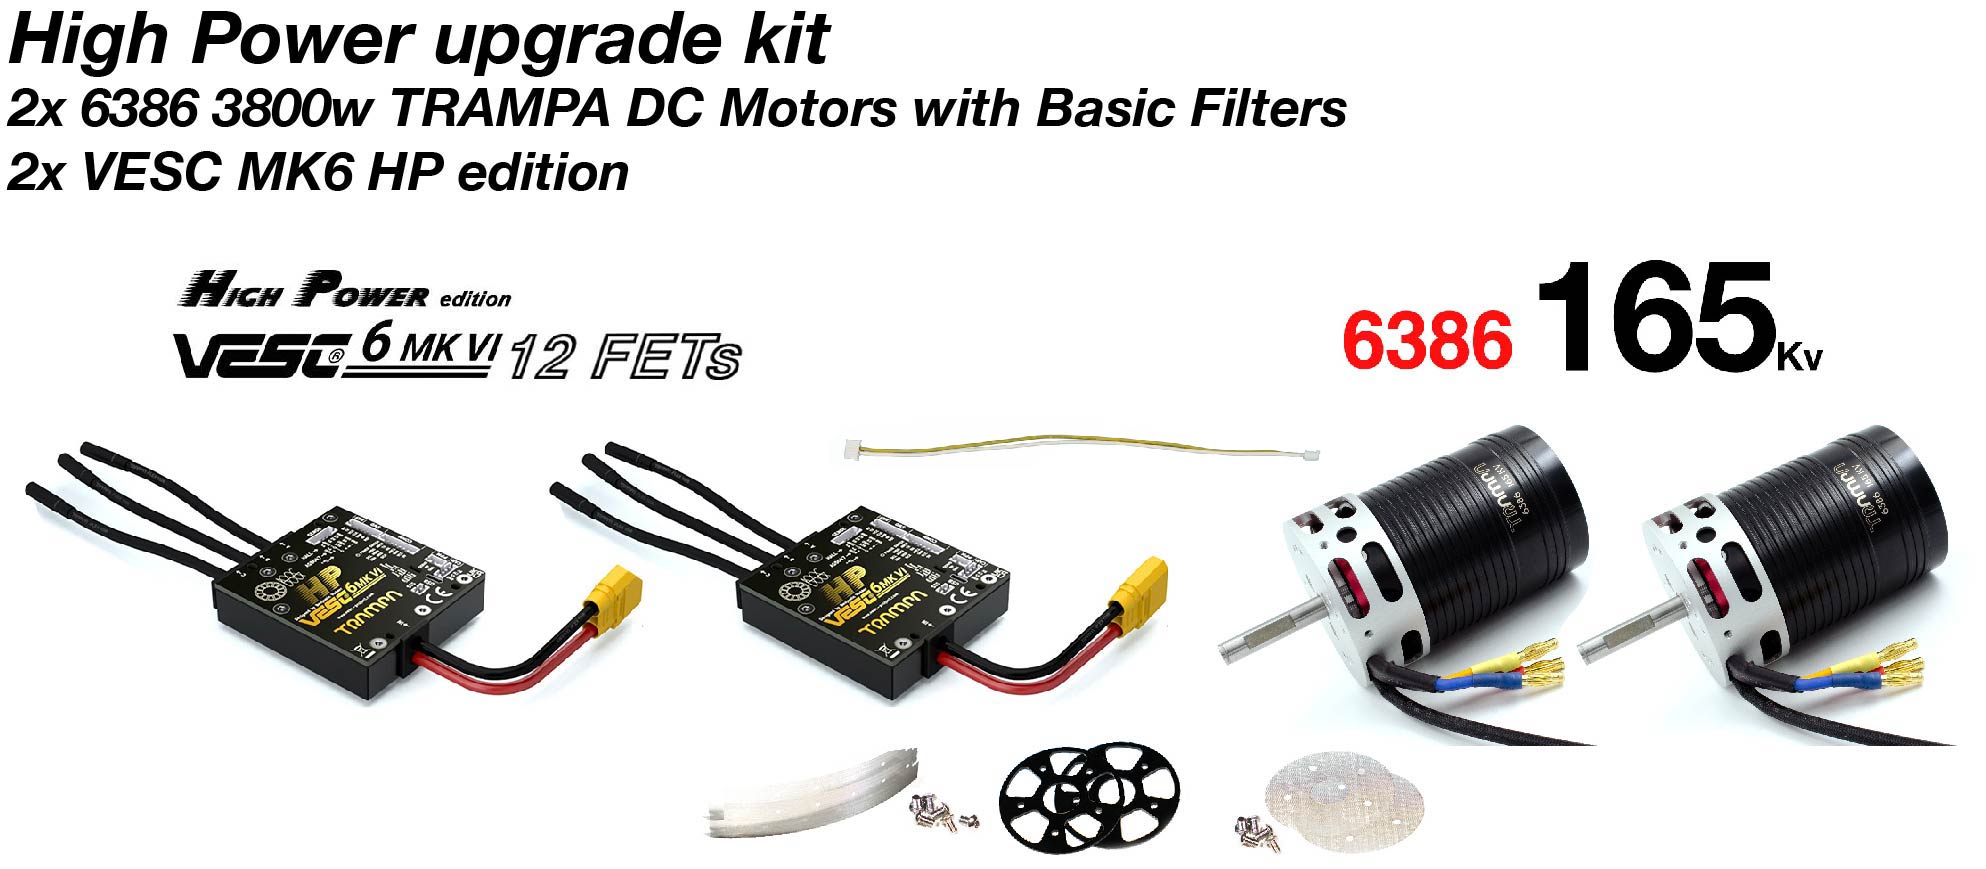 2x 6386 3800w TRAMPA DC Motors with Basic Filters & 2x VESC HP Power upgrade kit